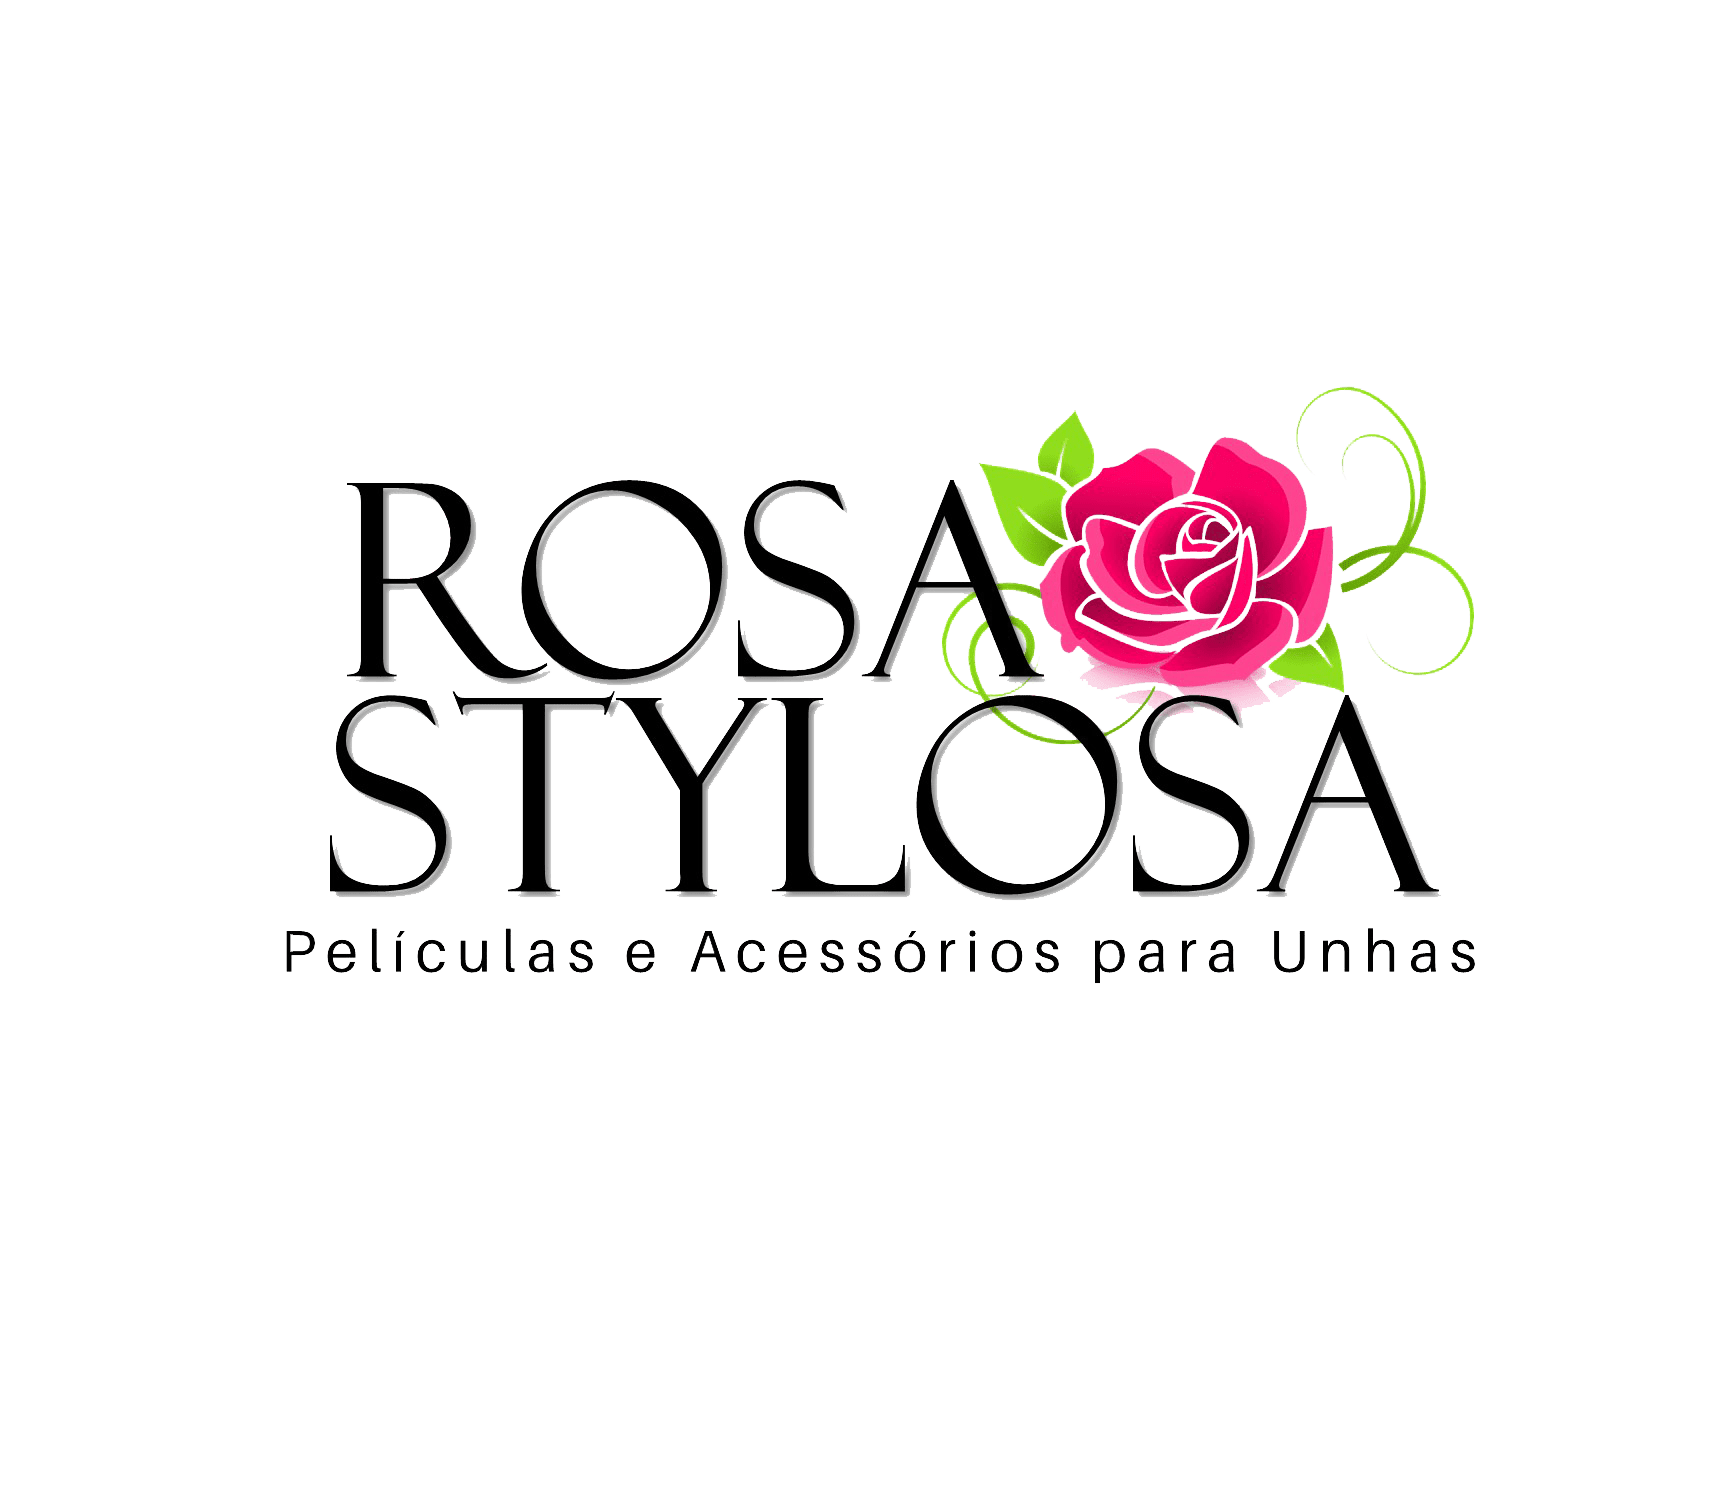 Rosa Stylosa